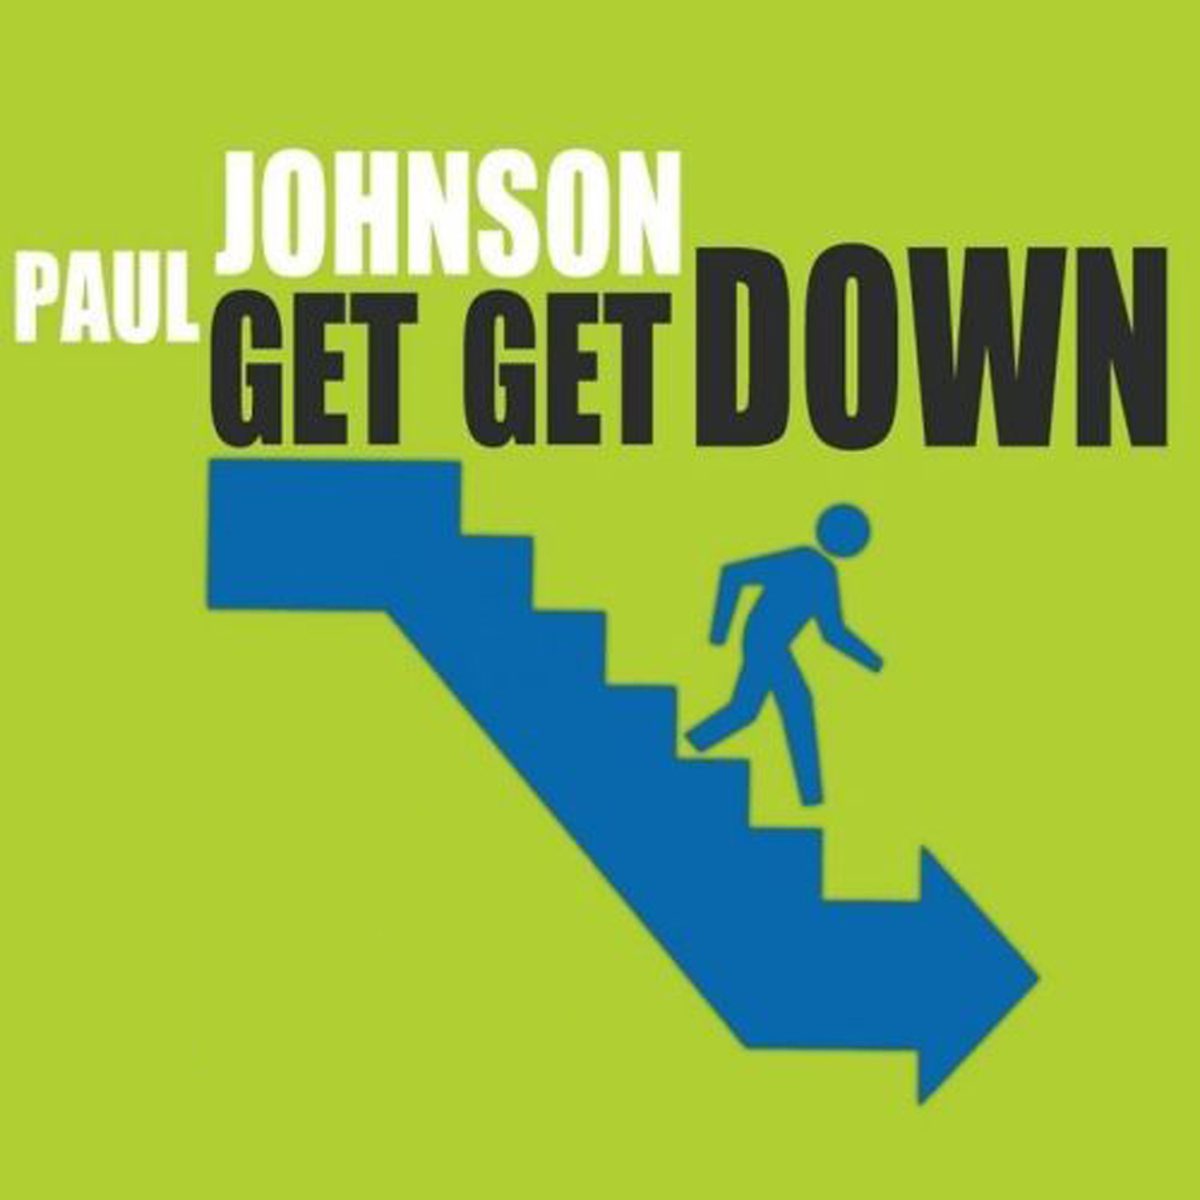 Get get down slowed. Paul Johnson get get down. Get get down пол Джонсон. Get get down DJ. Paul Johnson get get down клип.